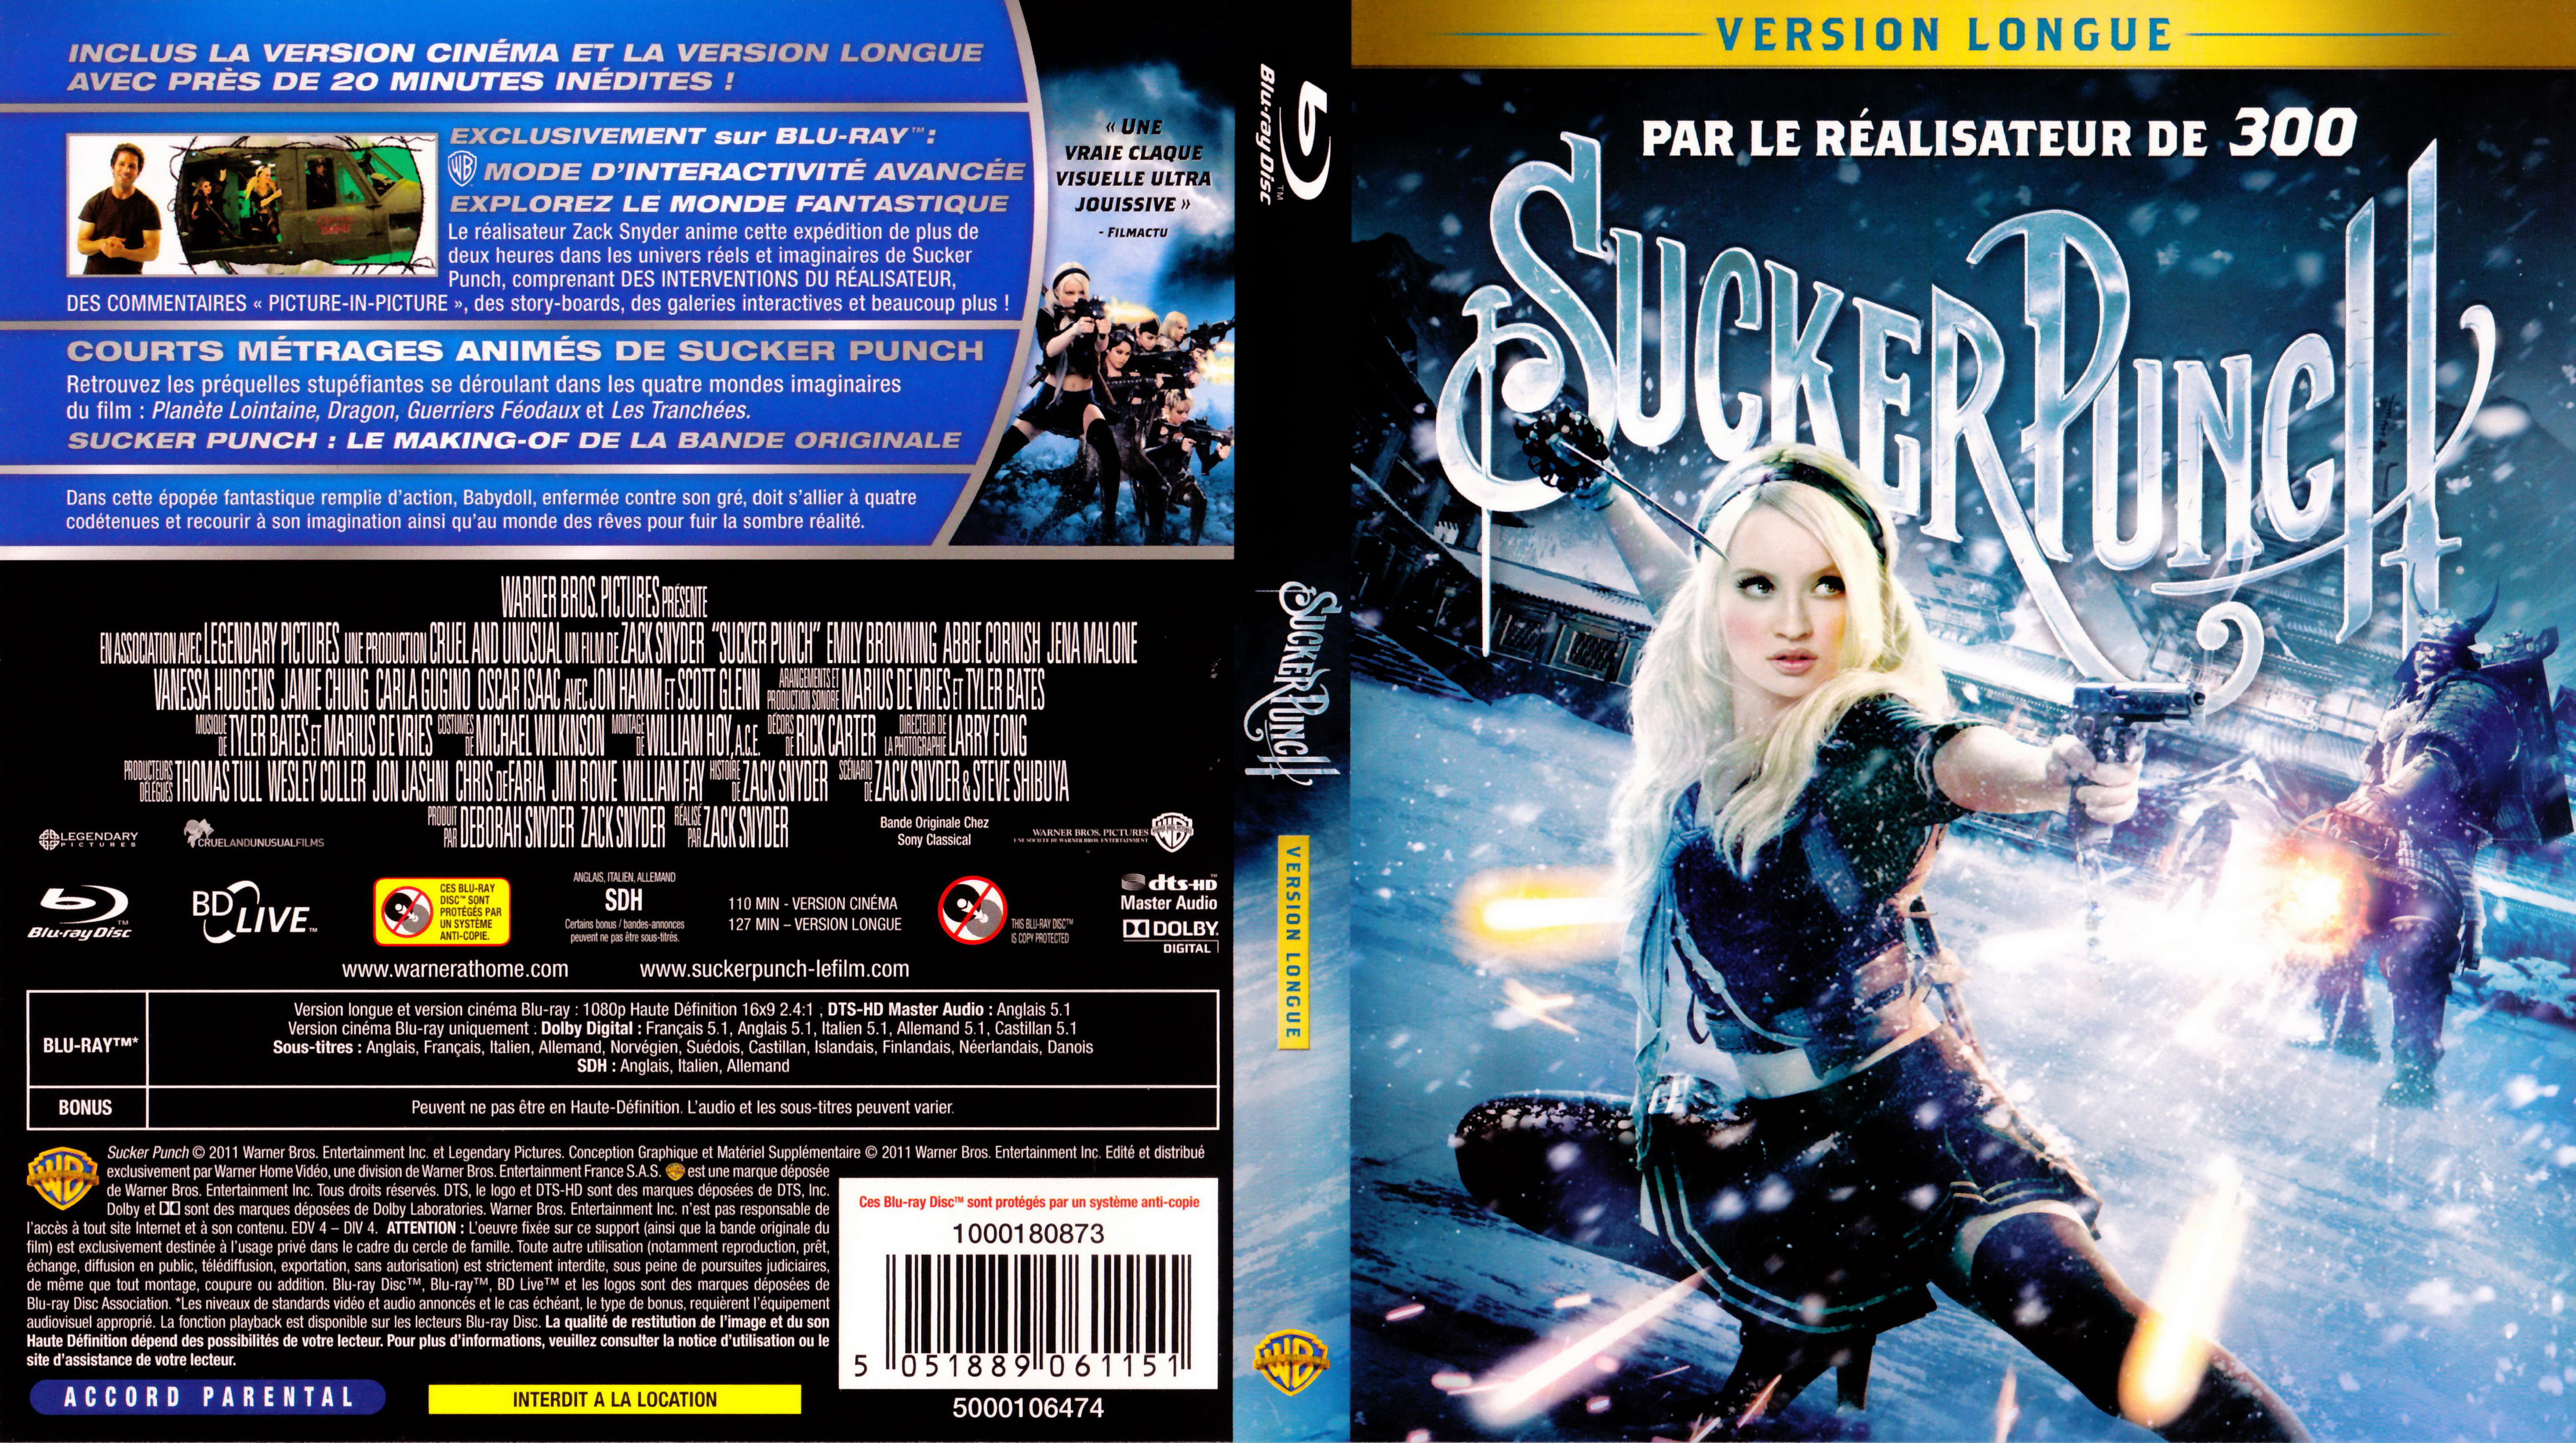 Jaquette DVD Sucker punch (BLU-RAY) v2